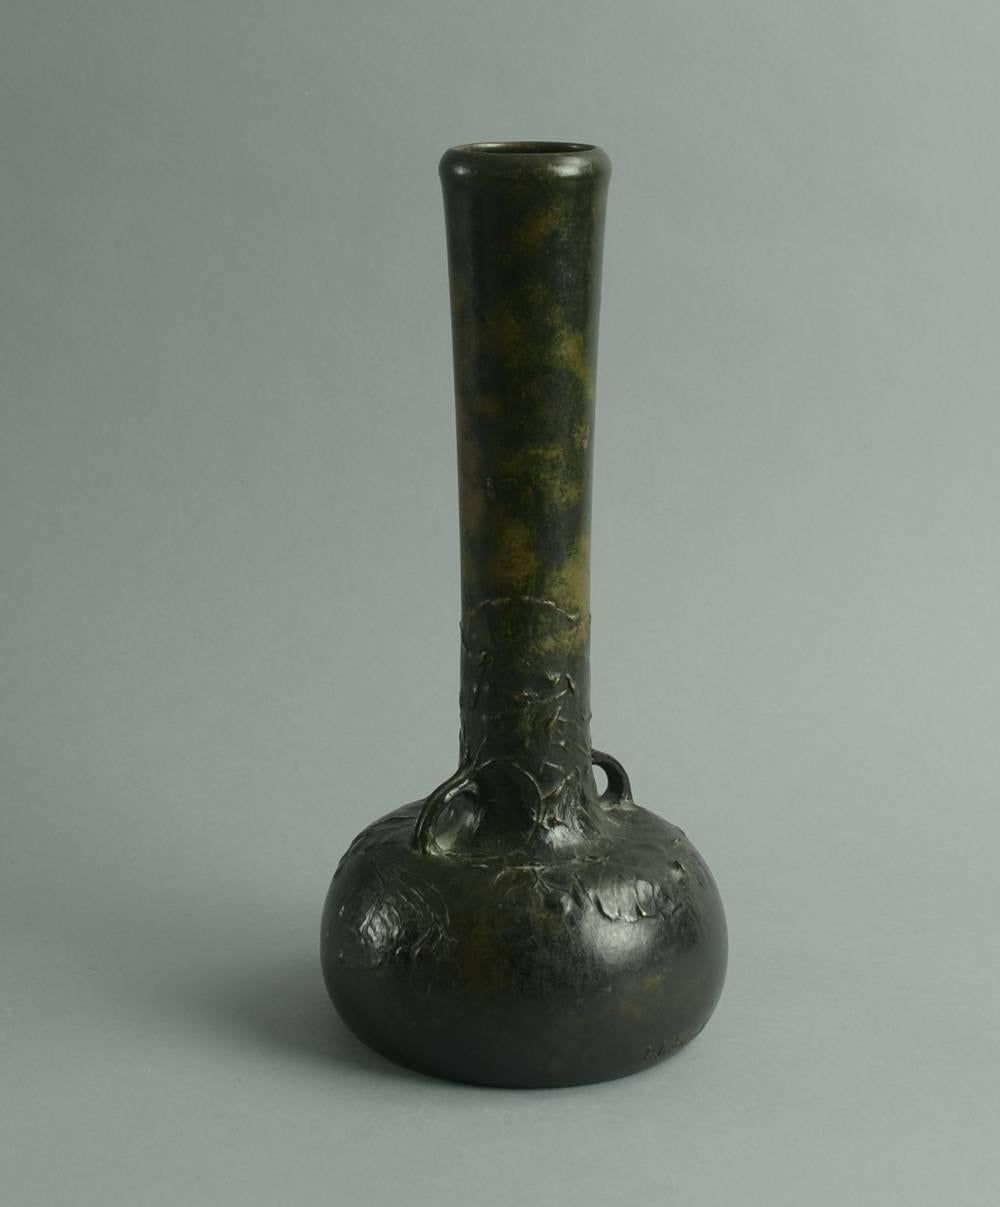 Bronze handled vase with applied floral decoration, c. 1900.